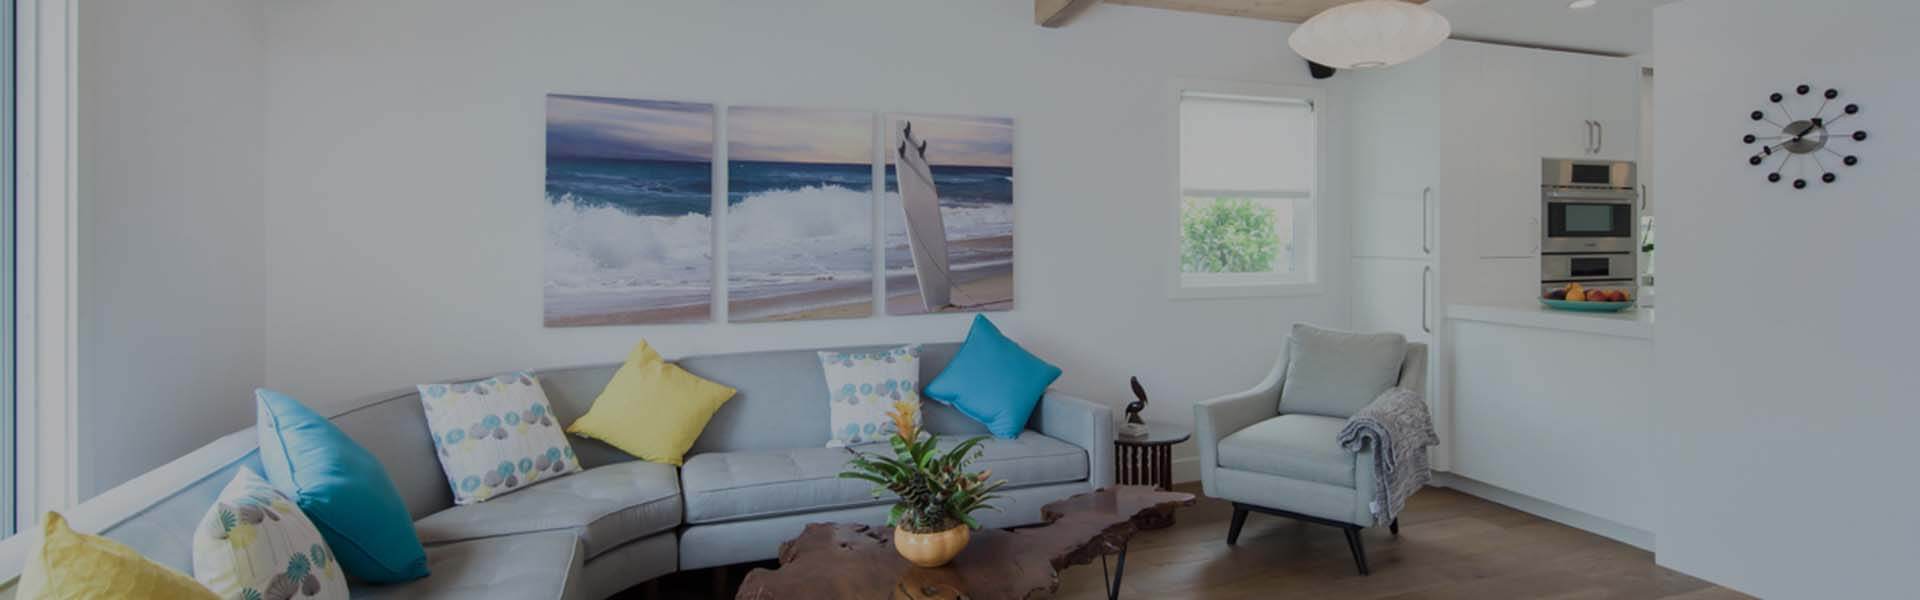 manhattan beach home renovation portfolio title